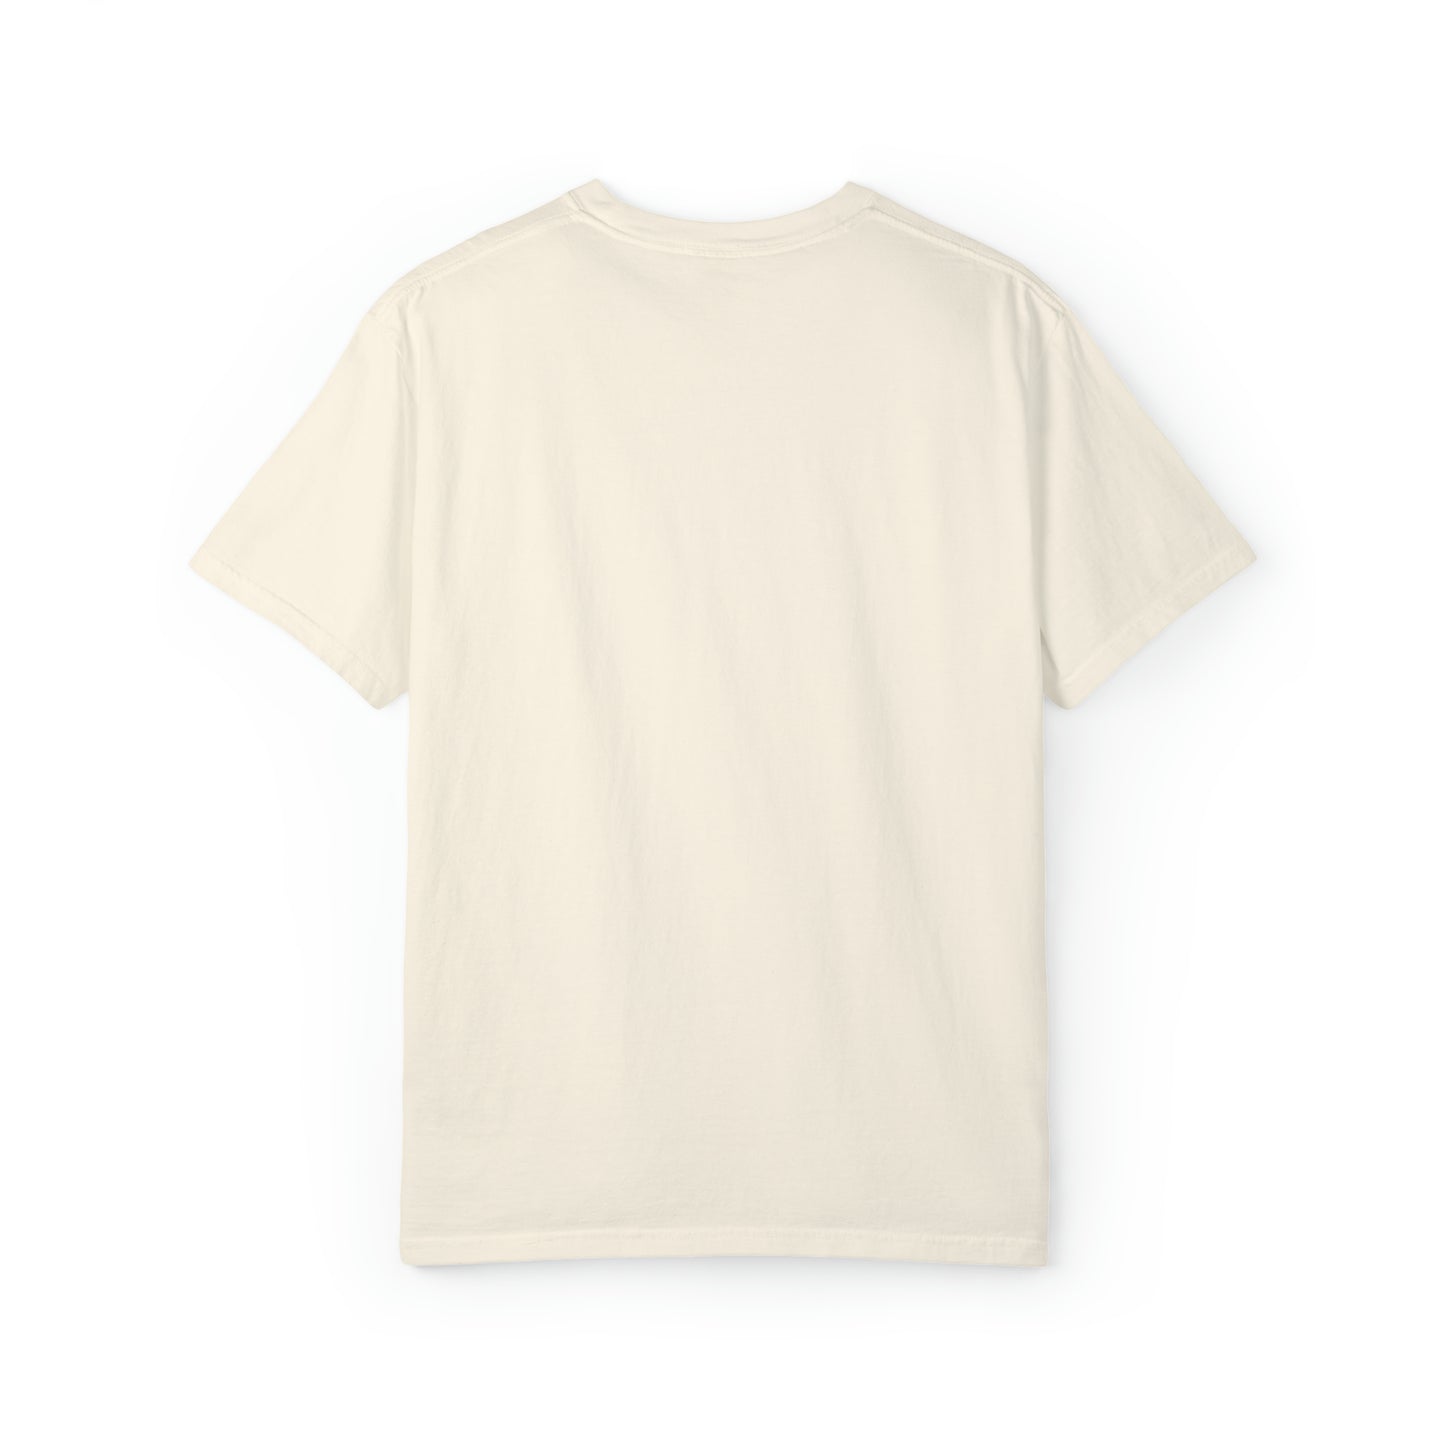 Boba bubble tea comfort color T-Shirt, Trendy oversized Shirt for Boba Tea lovers, Tshirt gift for bubble tea lovers